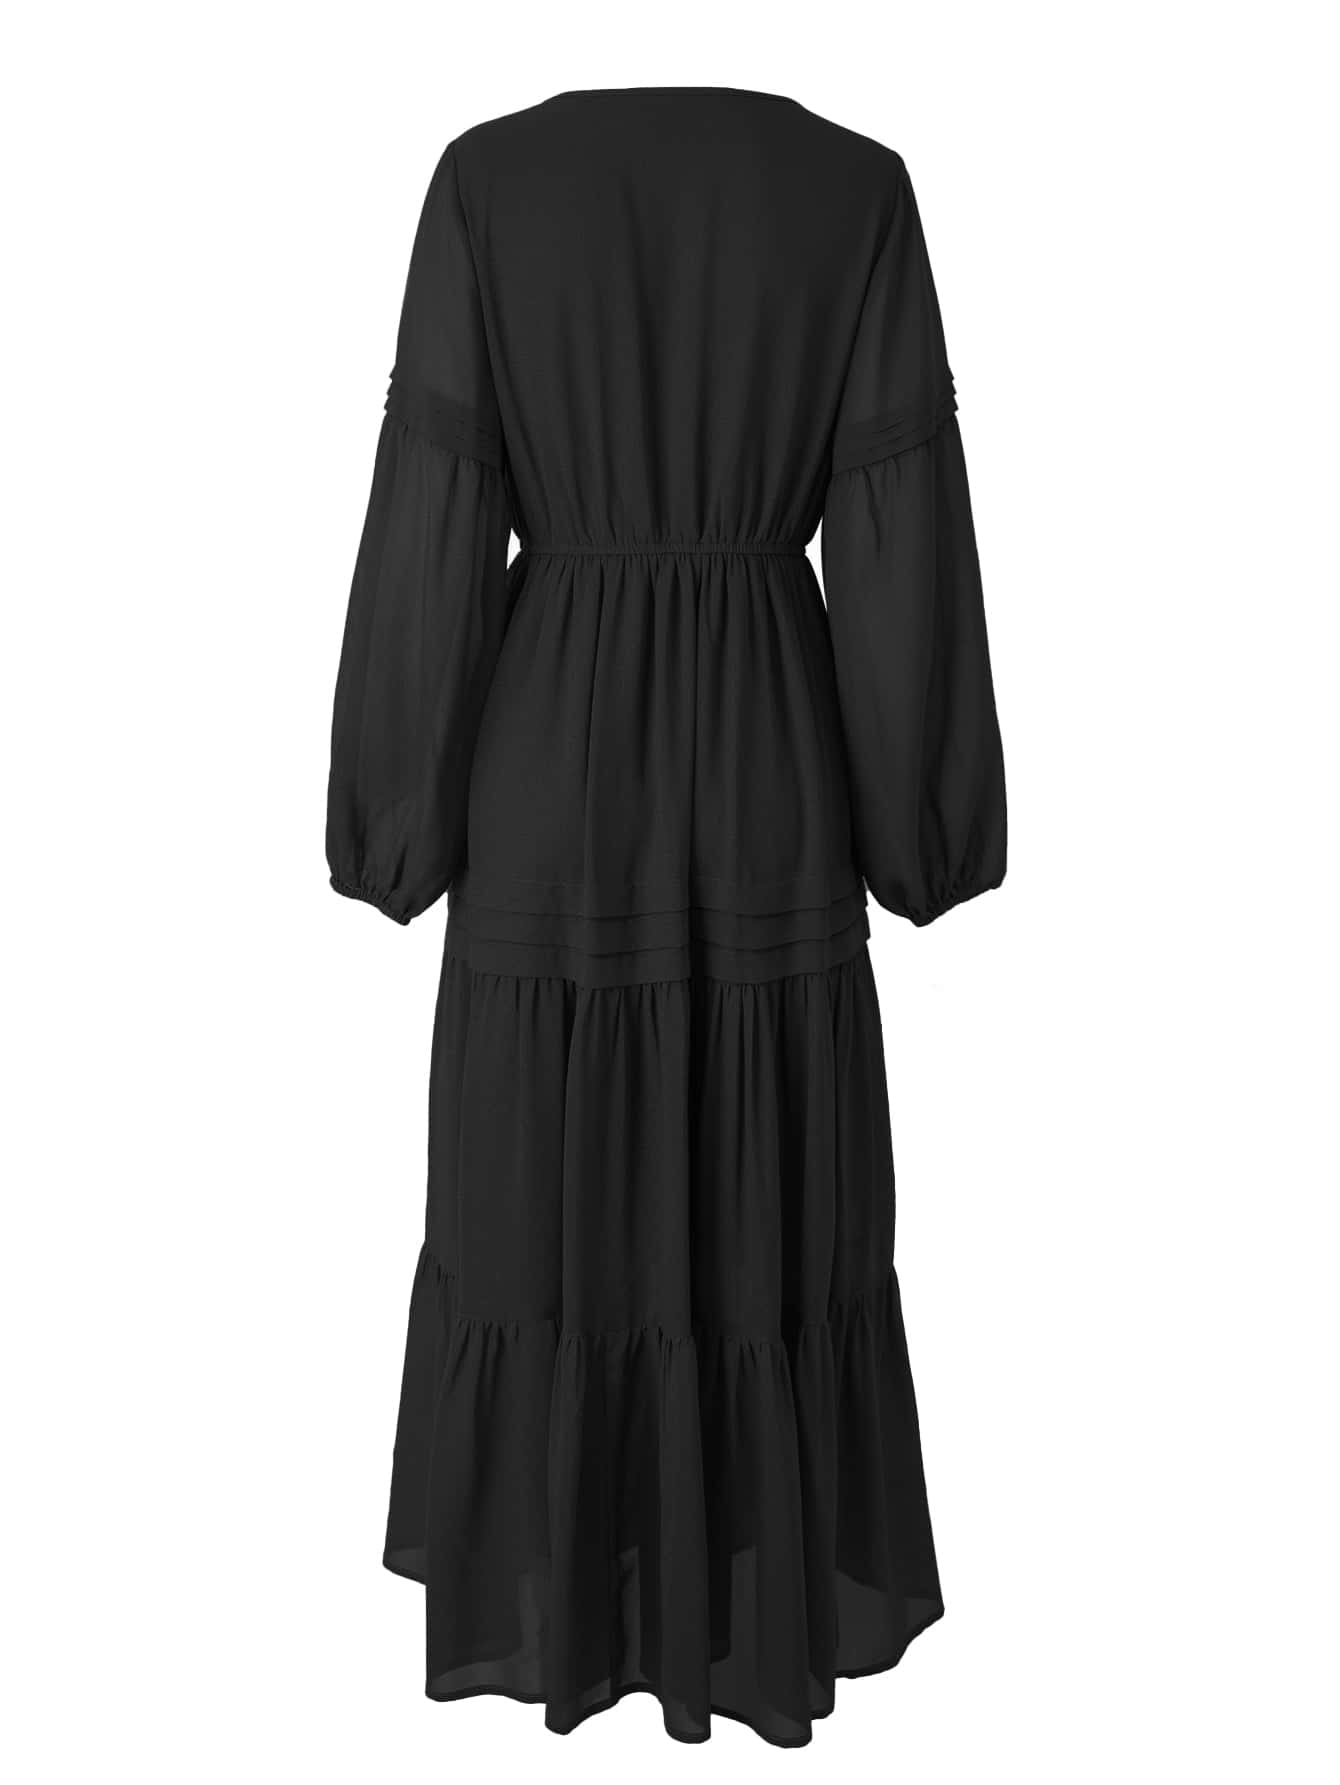 Flowy Chiffon Lantern Sleeve Dress with V-Neck and Ruffled Hemline - Feminine High-Waist Fit